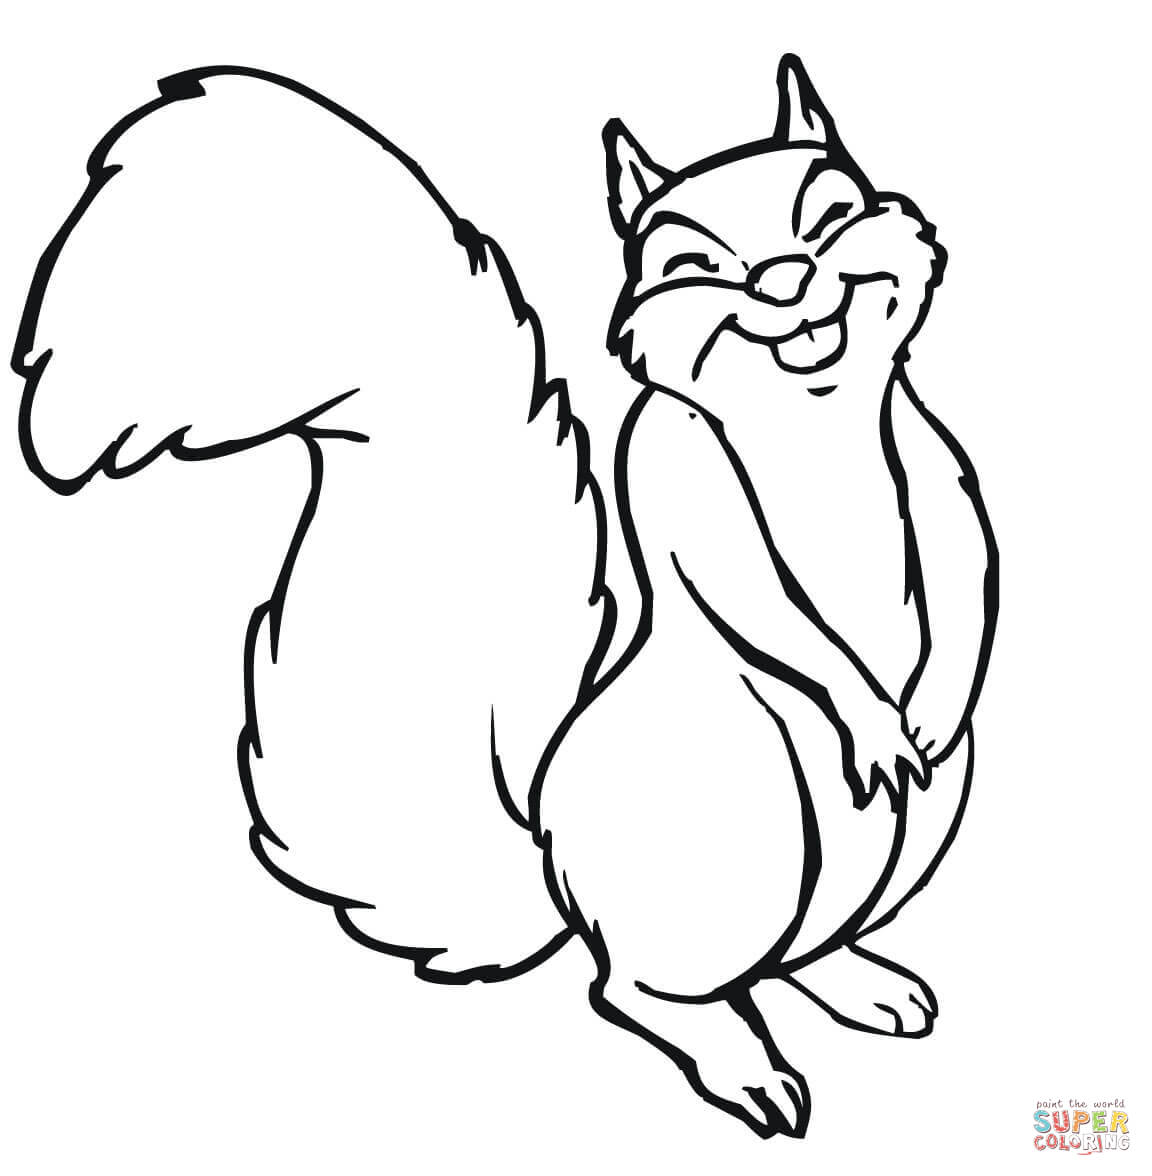 Squirrel coloring #11, Download drawings